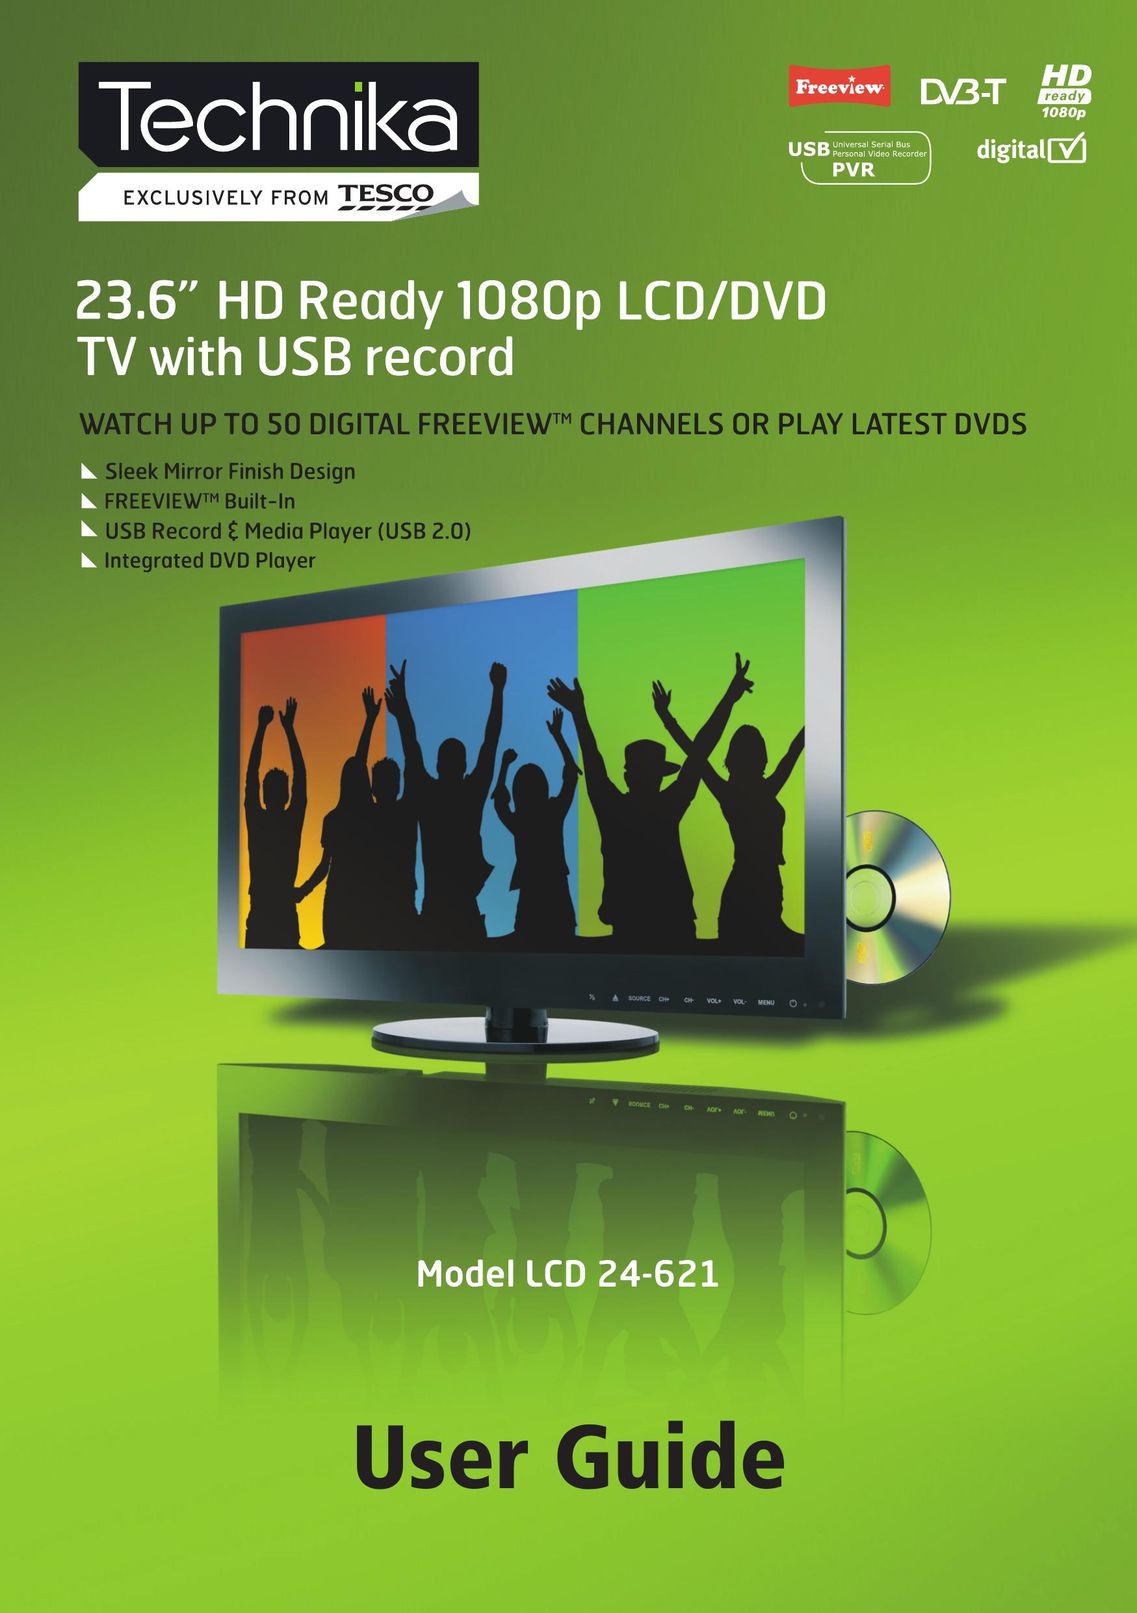 Technika LCD 24-621 Flat Panel Television User Manual